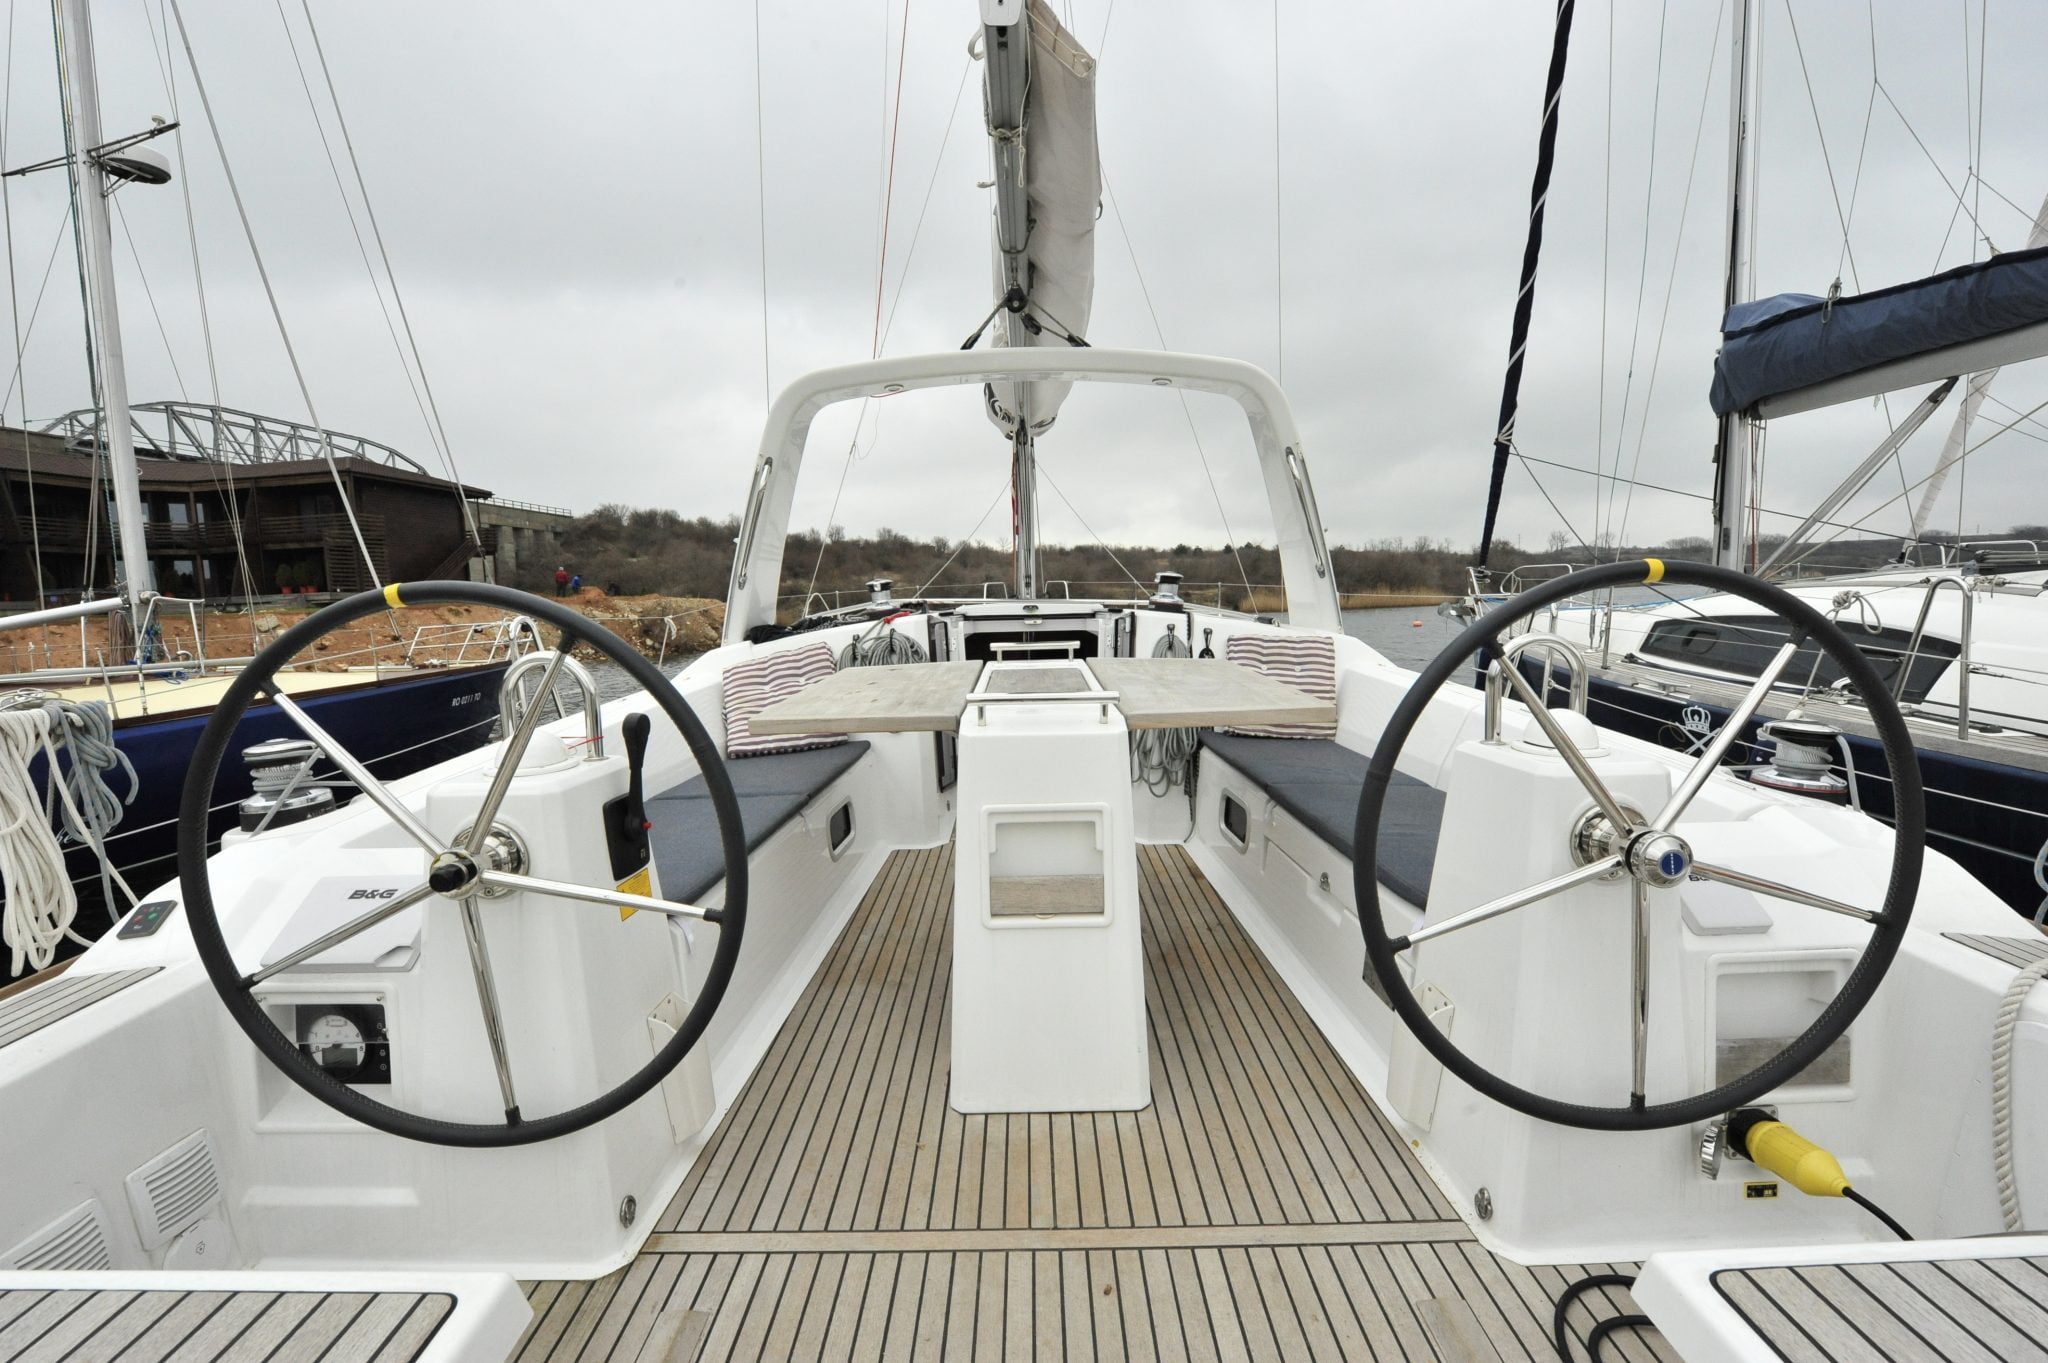 SailON | Închiriere yachturi, agrement nautic, teambuilding, cursuri sailing